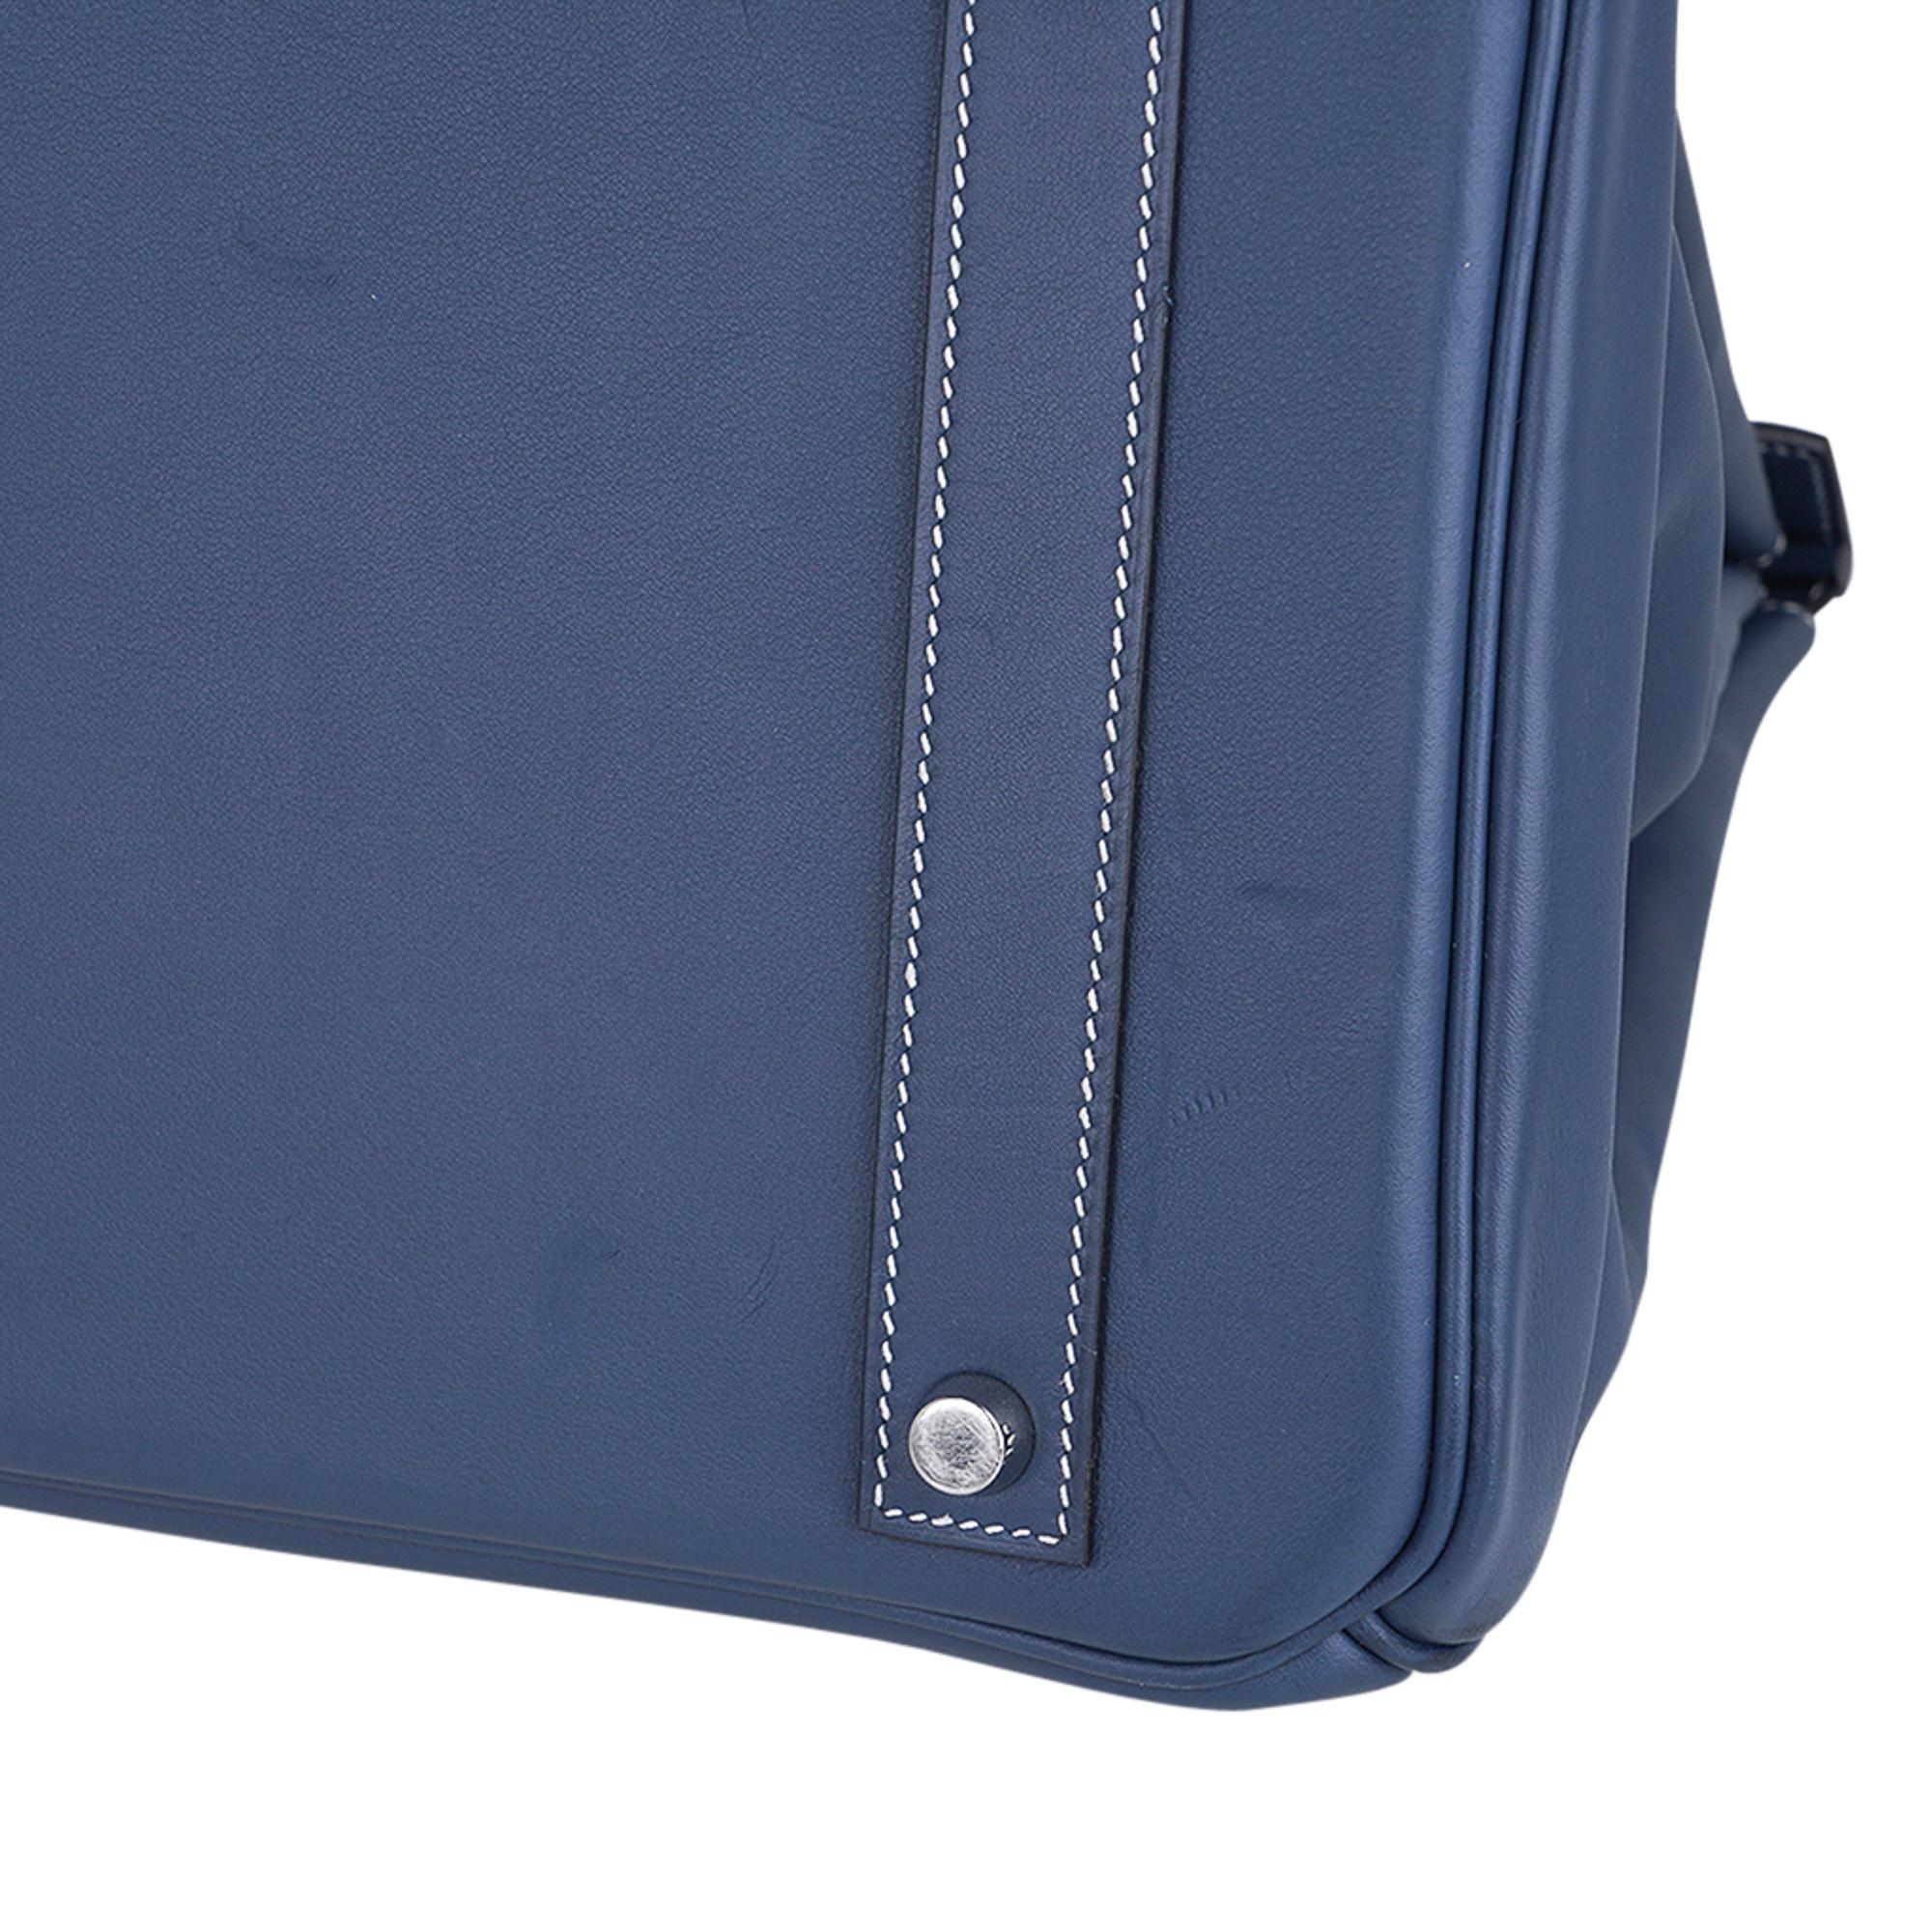 Hermes Birkin 40 Ghillies Blue de Prusse w/ Blue Toile Bag Limited Edition For Sale 6